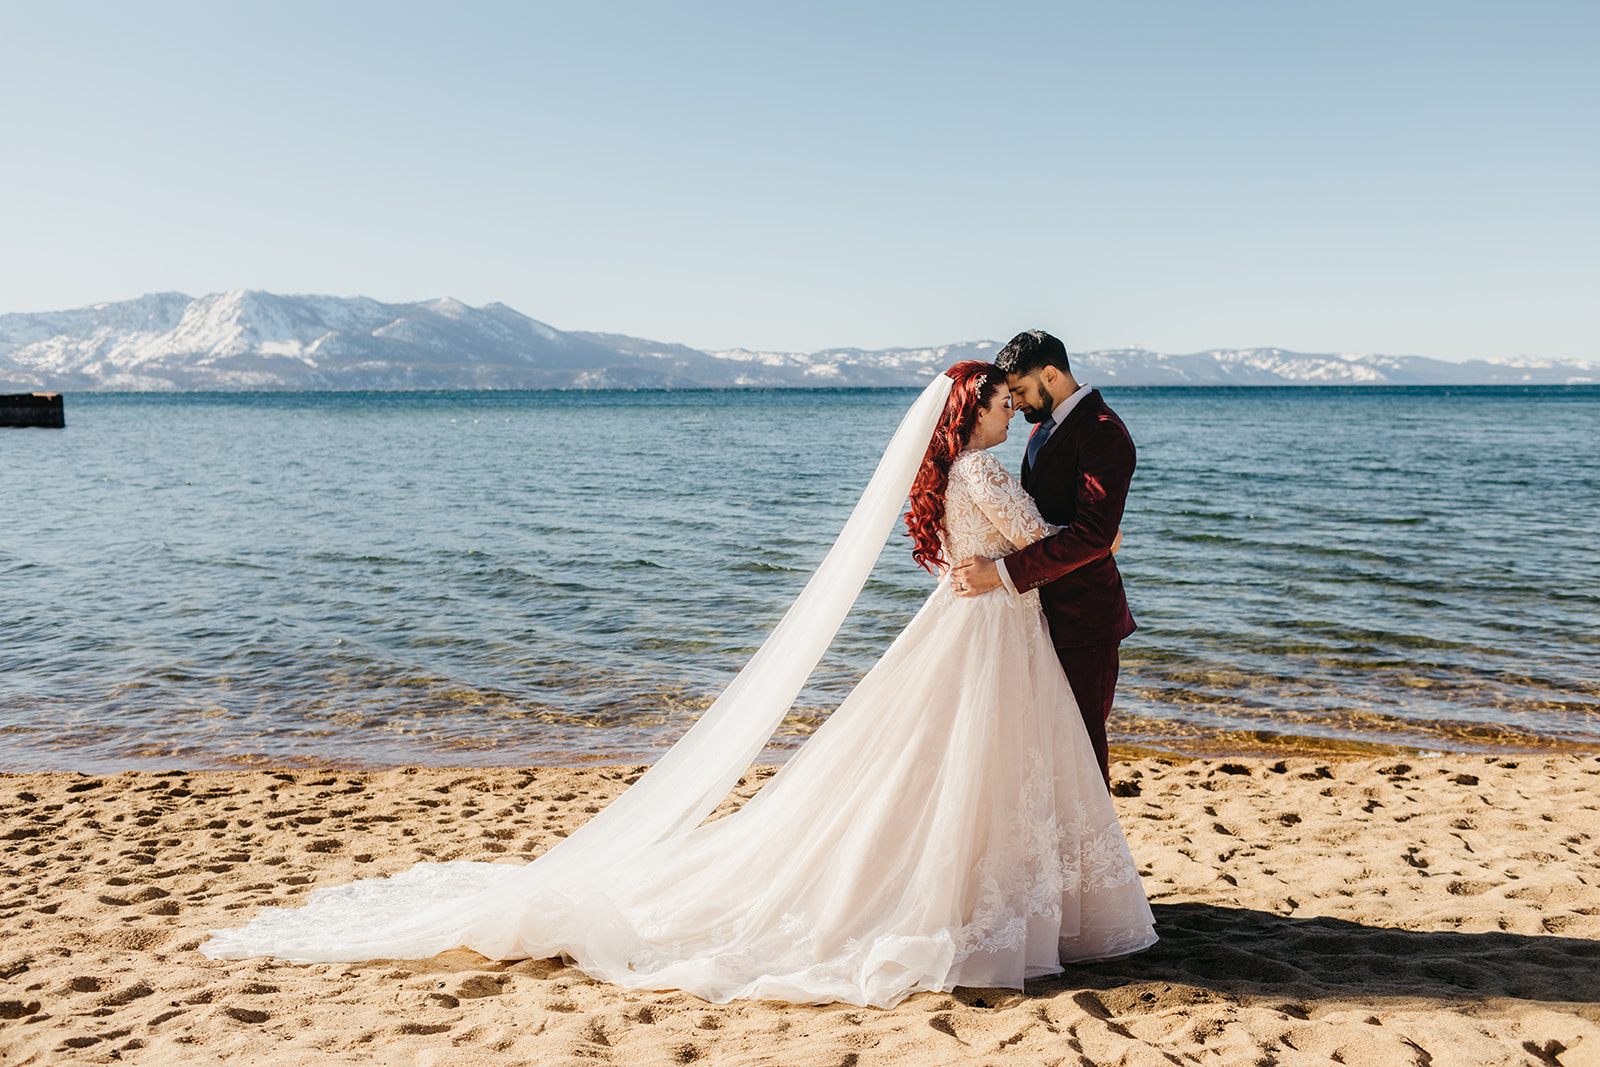 Winter Tale of a Magical Lake Tahoe Wedding